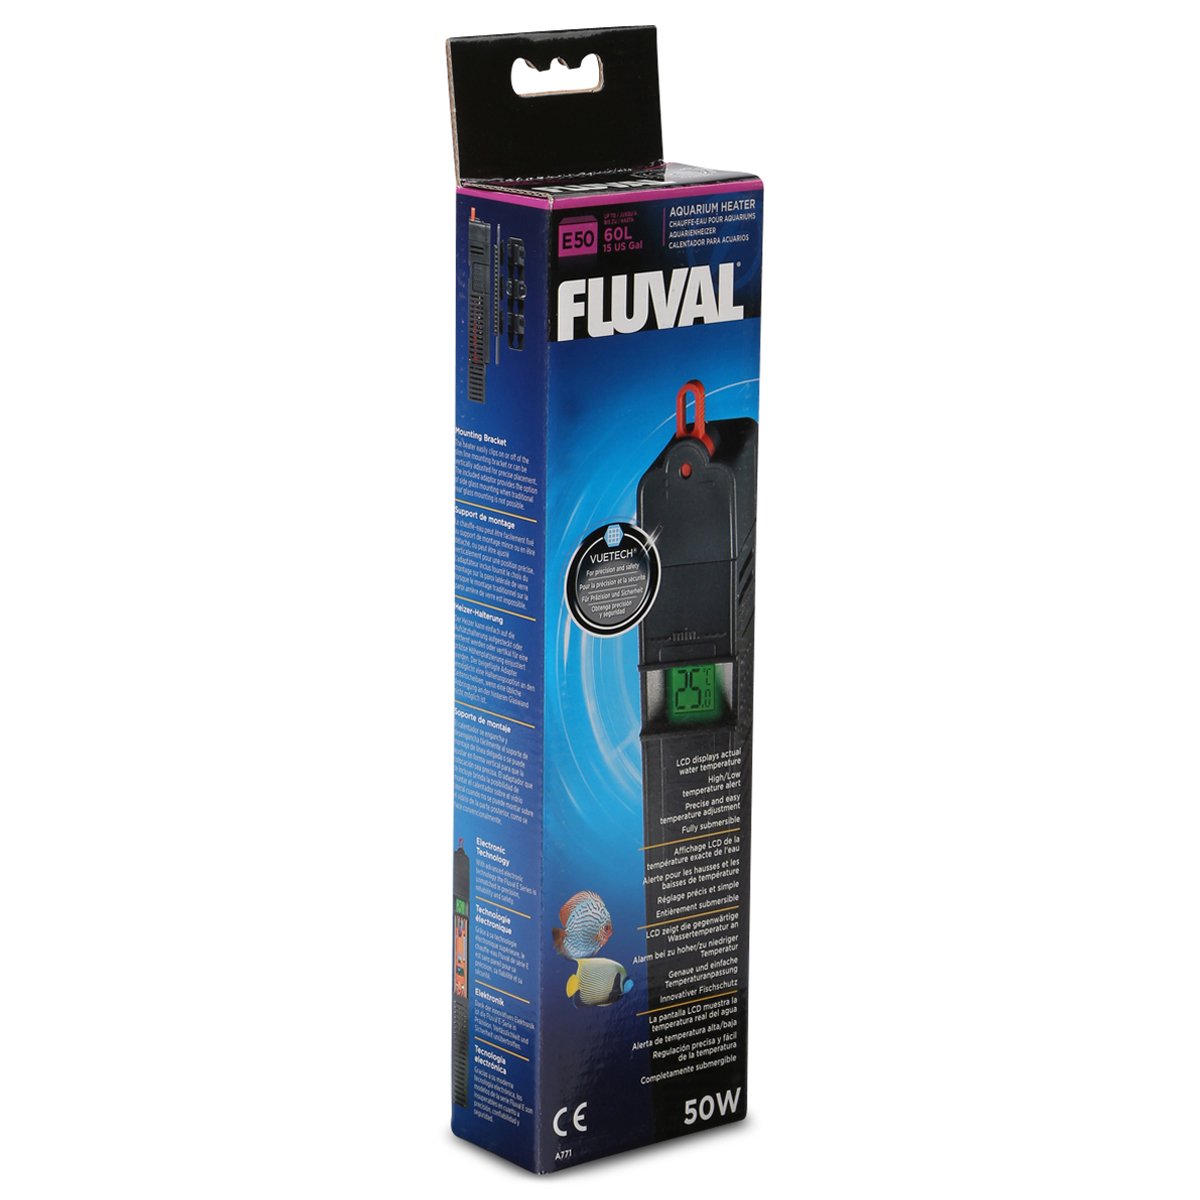 FLUVAL elektronischer Aquariumheizer VueTECH E 300 von Fluval